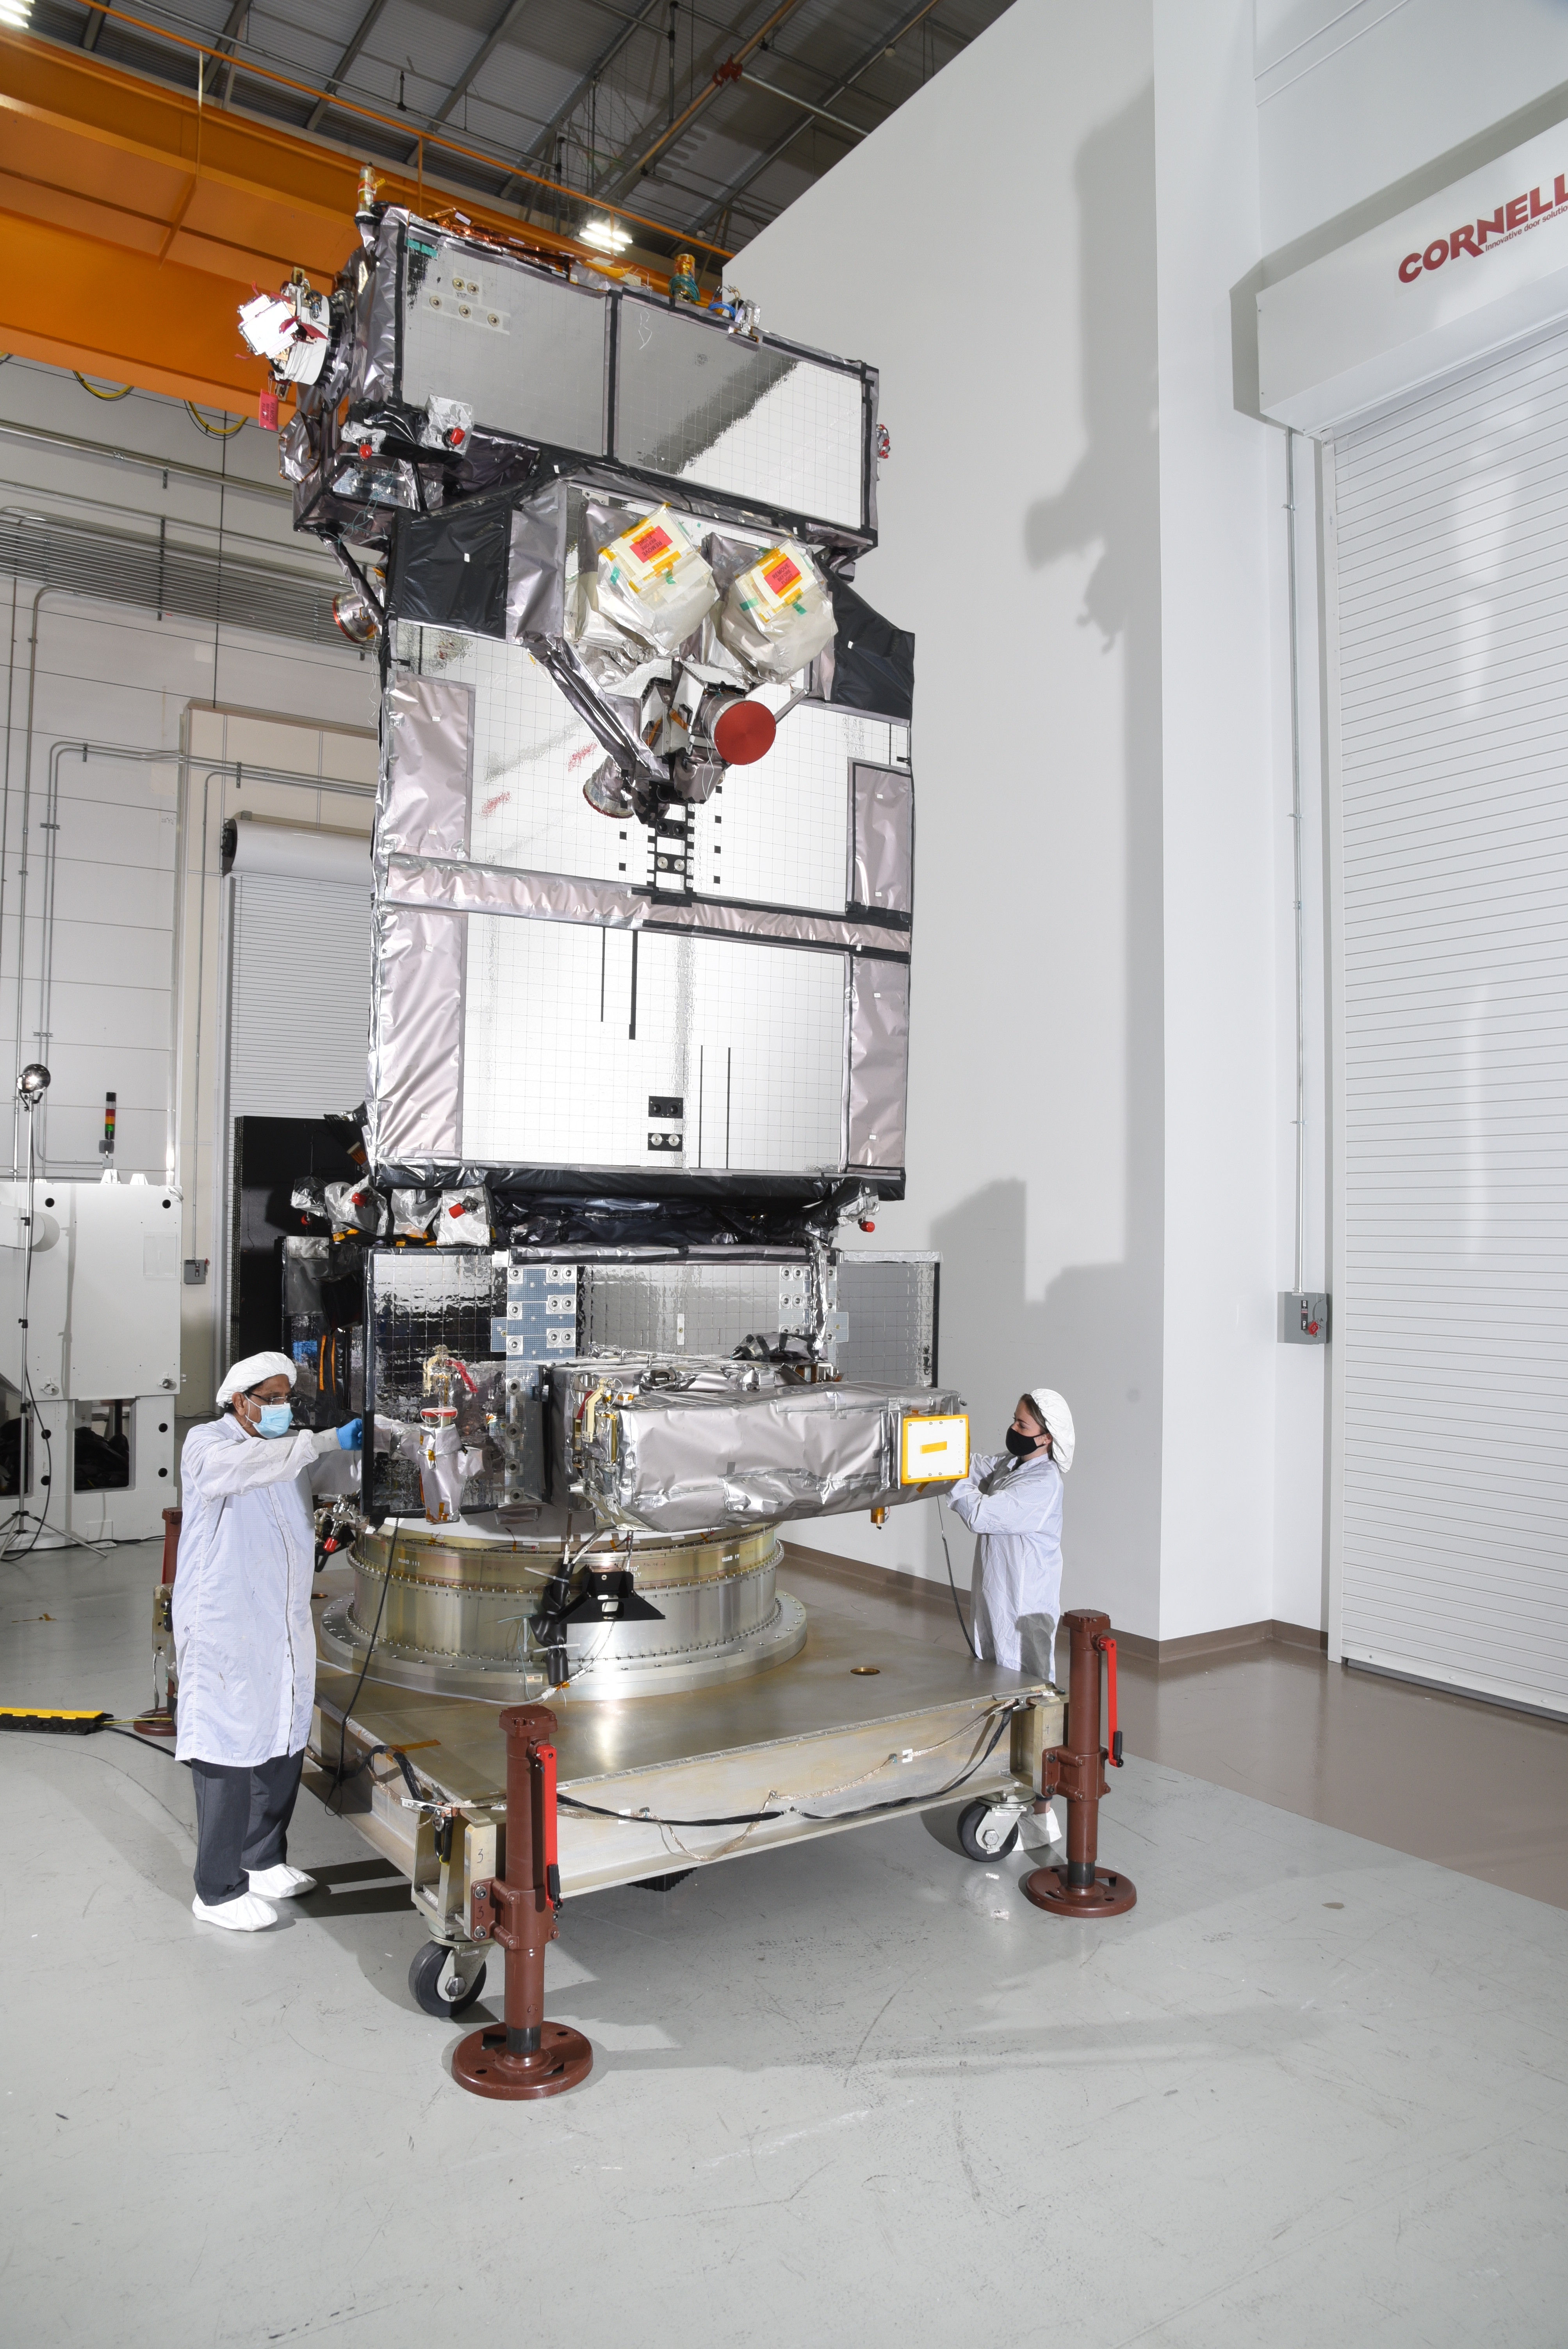 NASA's Laser Communications Relay Demonstration instrument.